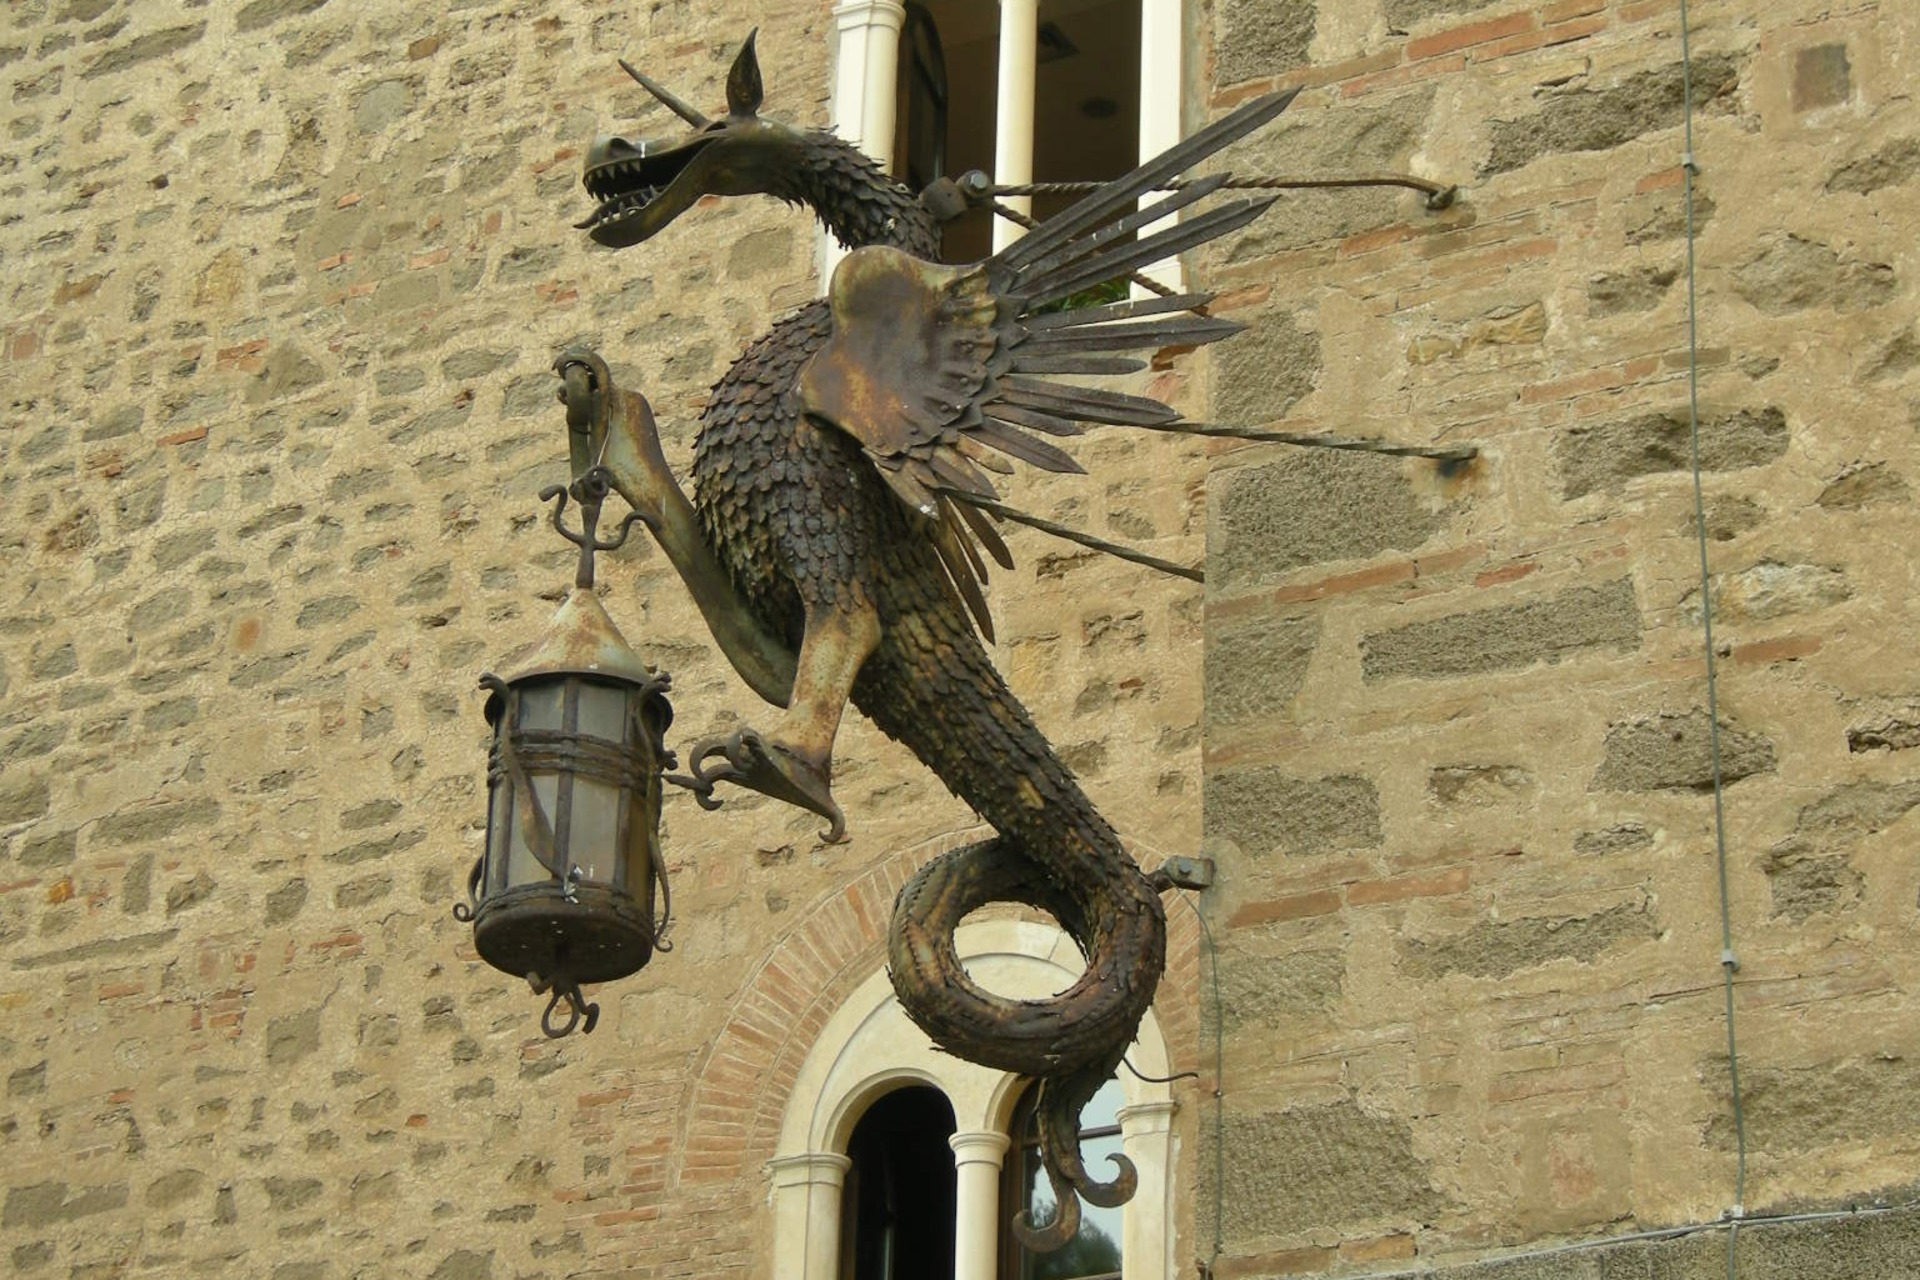 Dragoi me pishtar në muret e Castello Pasquini në Castiglioncello di Rosignano Marittimo